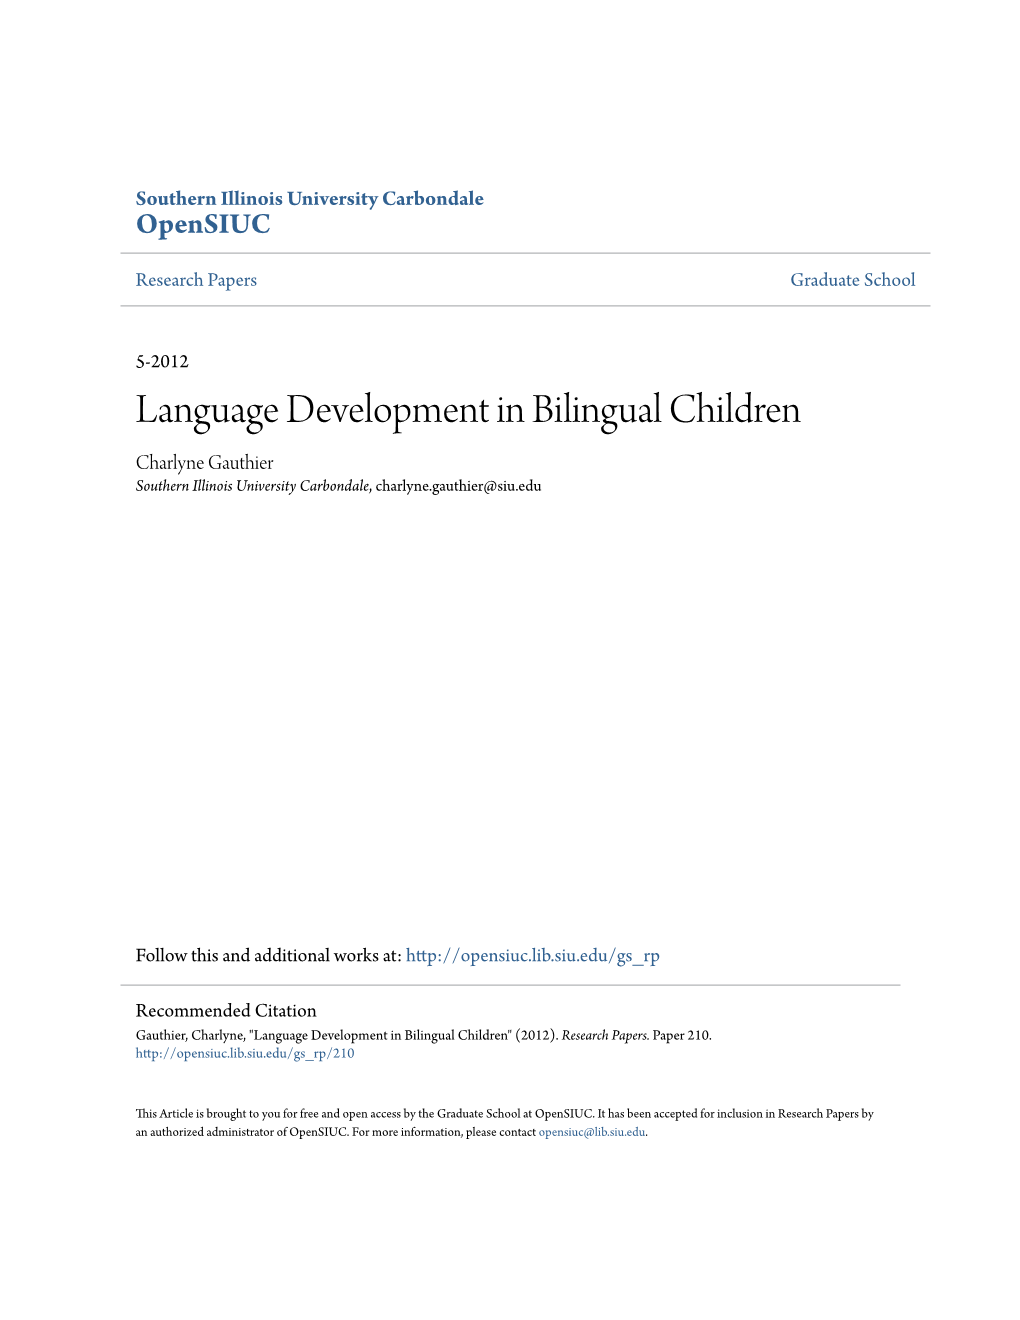 Language Development in Bilingual Children Charlyne Gauthier Southern Illinois University Carbondale, Charlyne.Gauthier@Siu.Edu